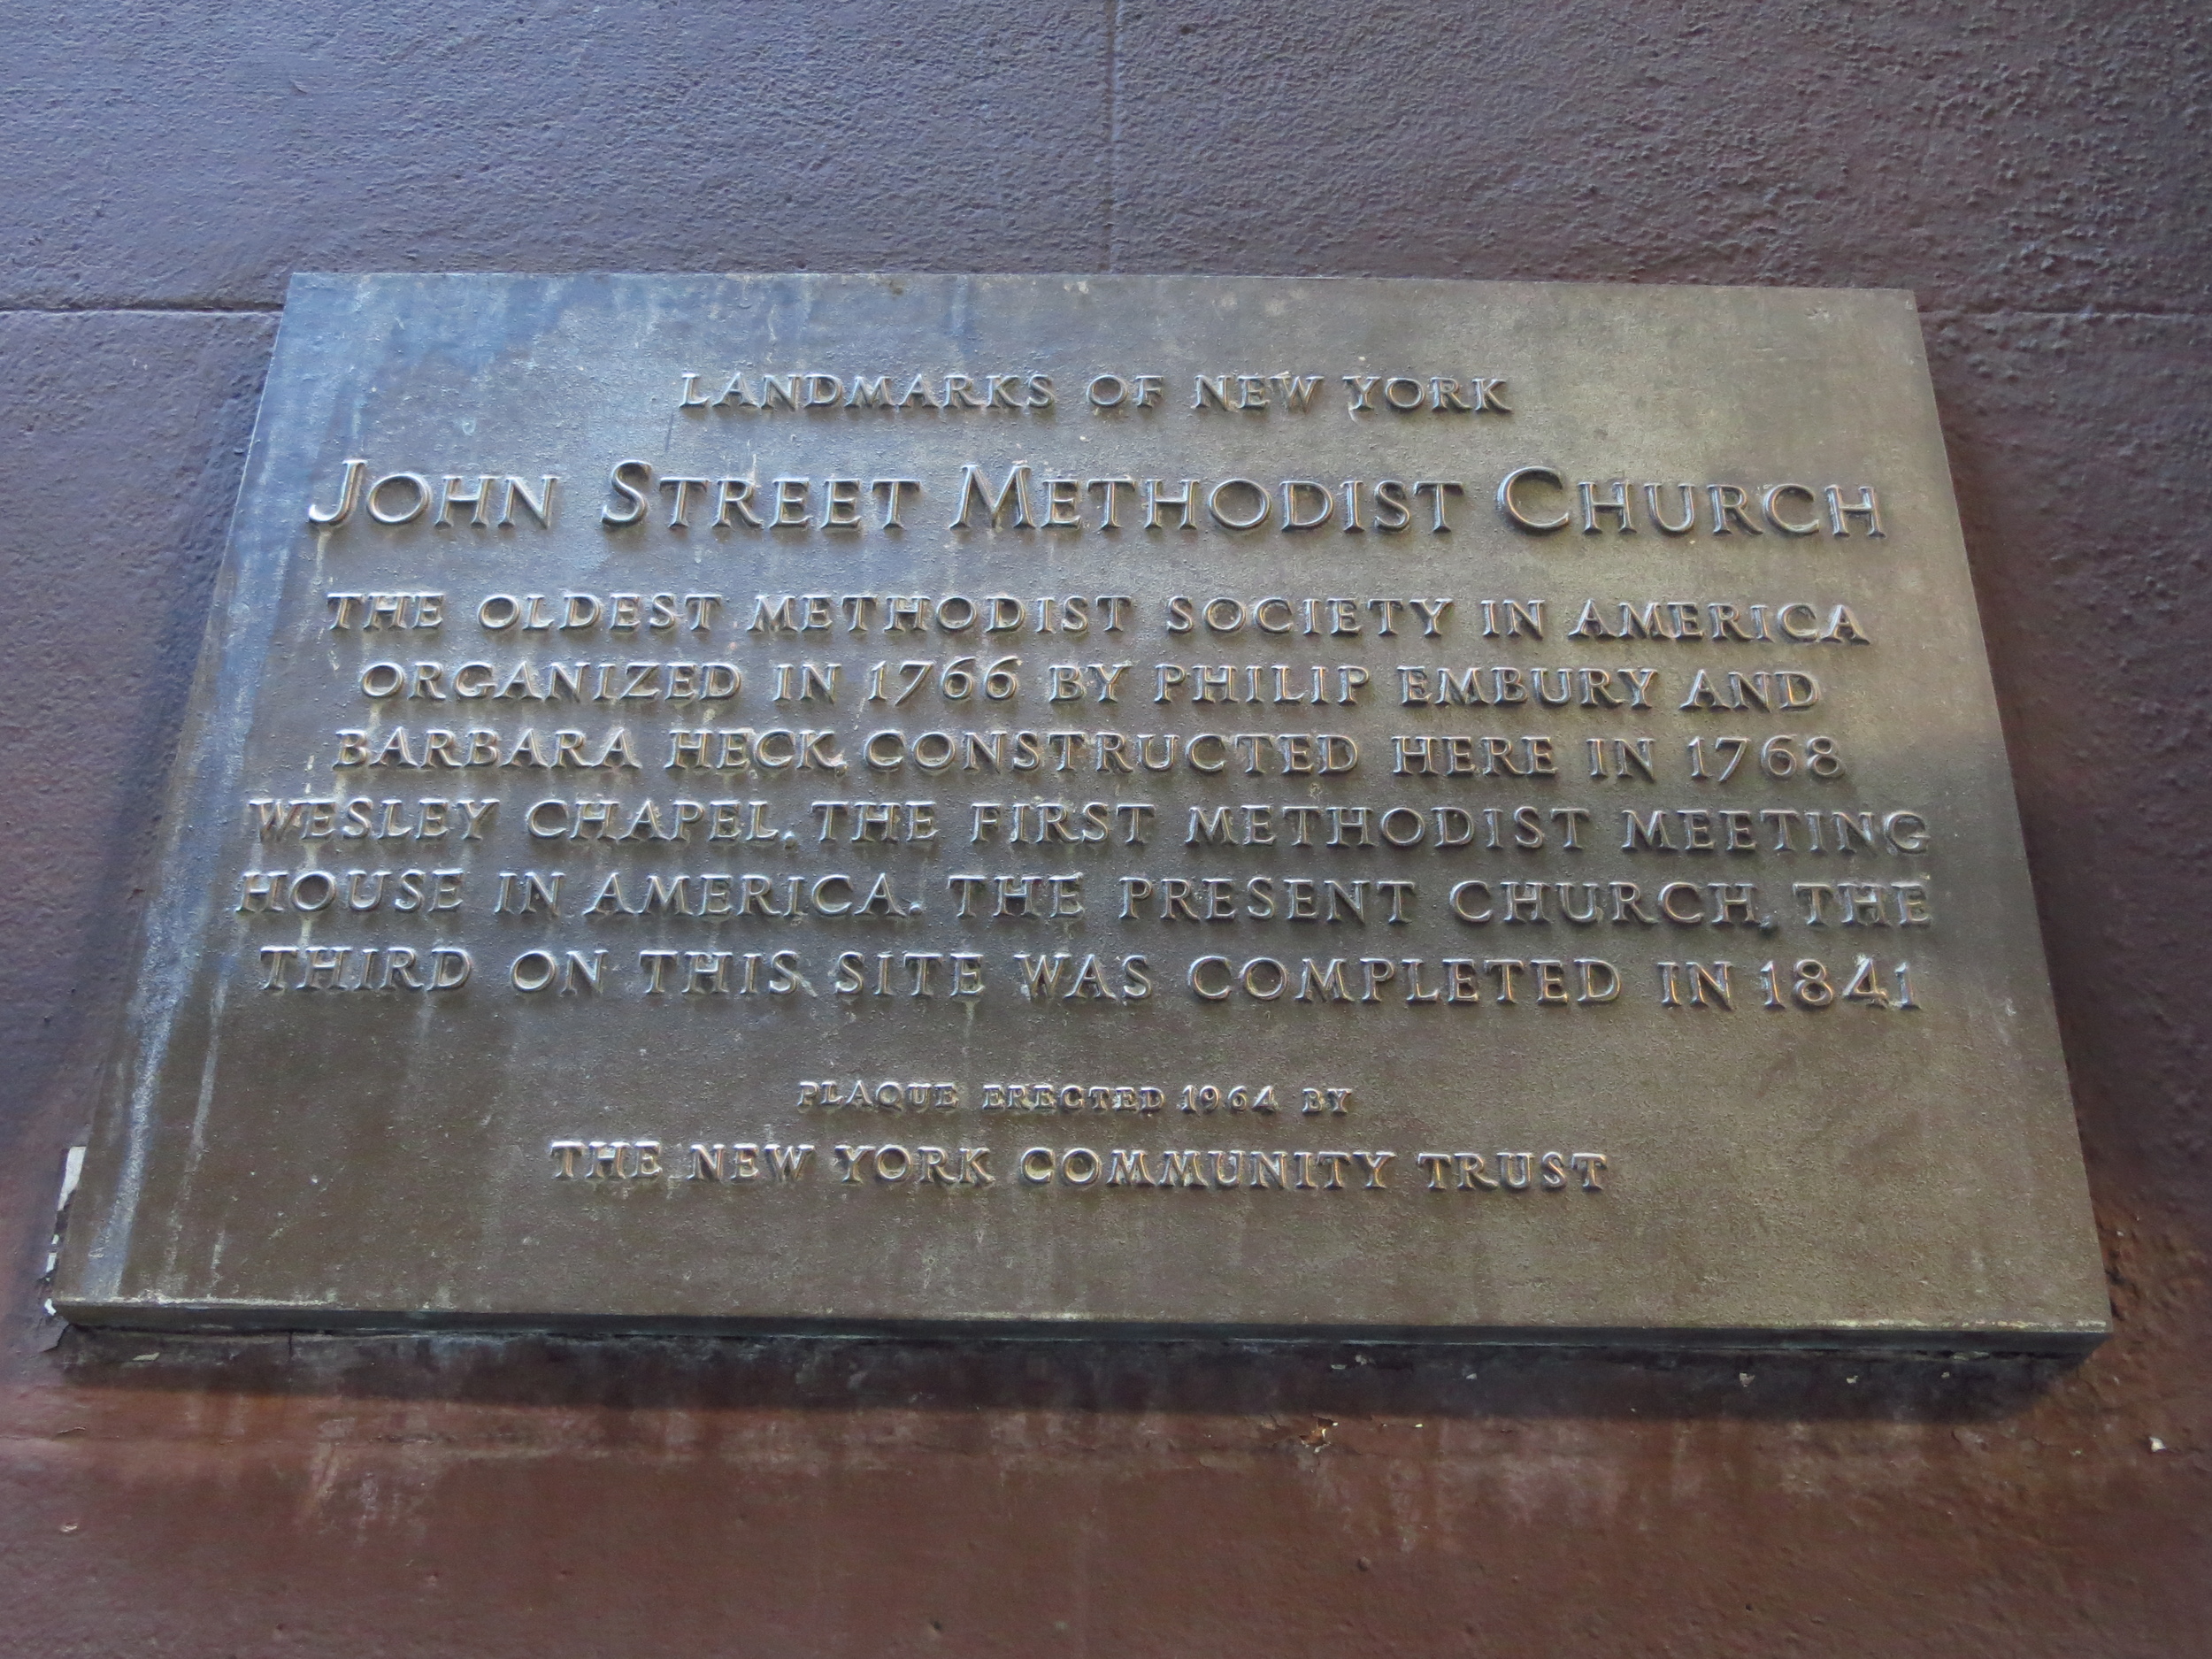 John St. Methodist Church history